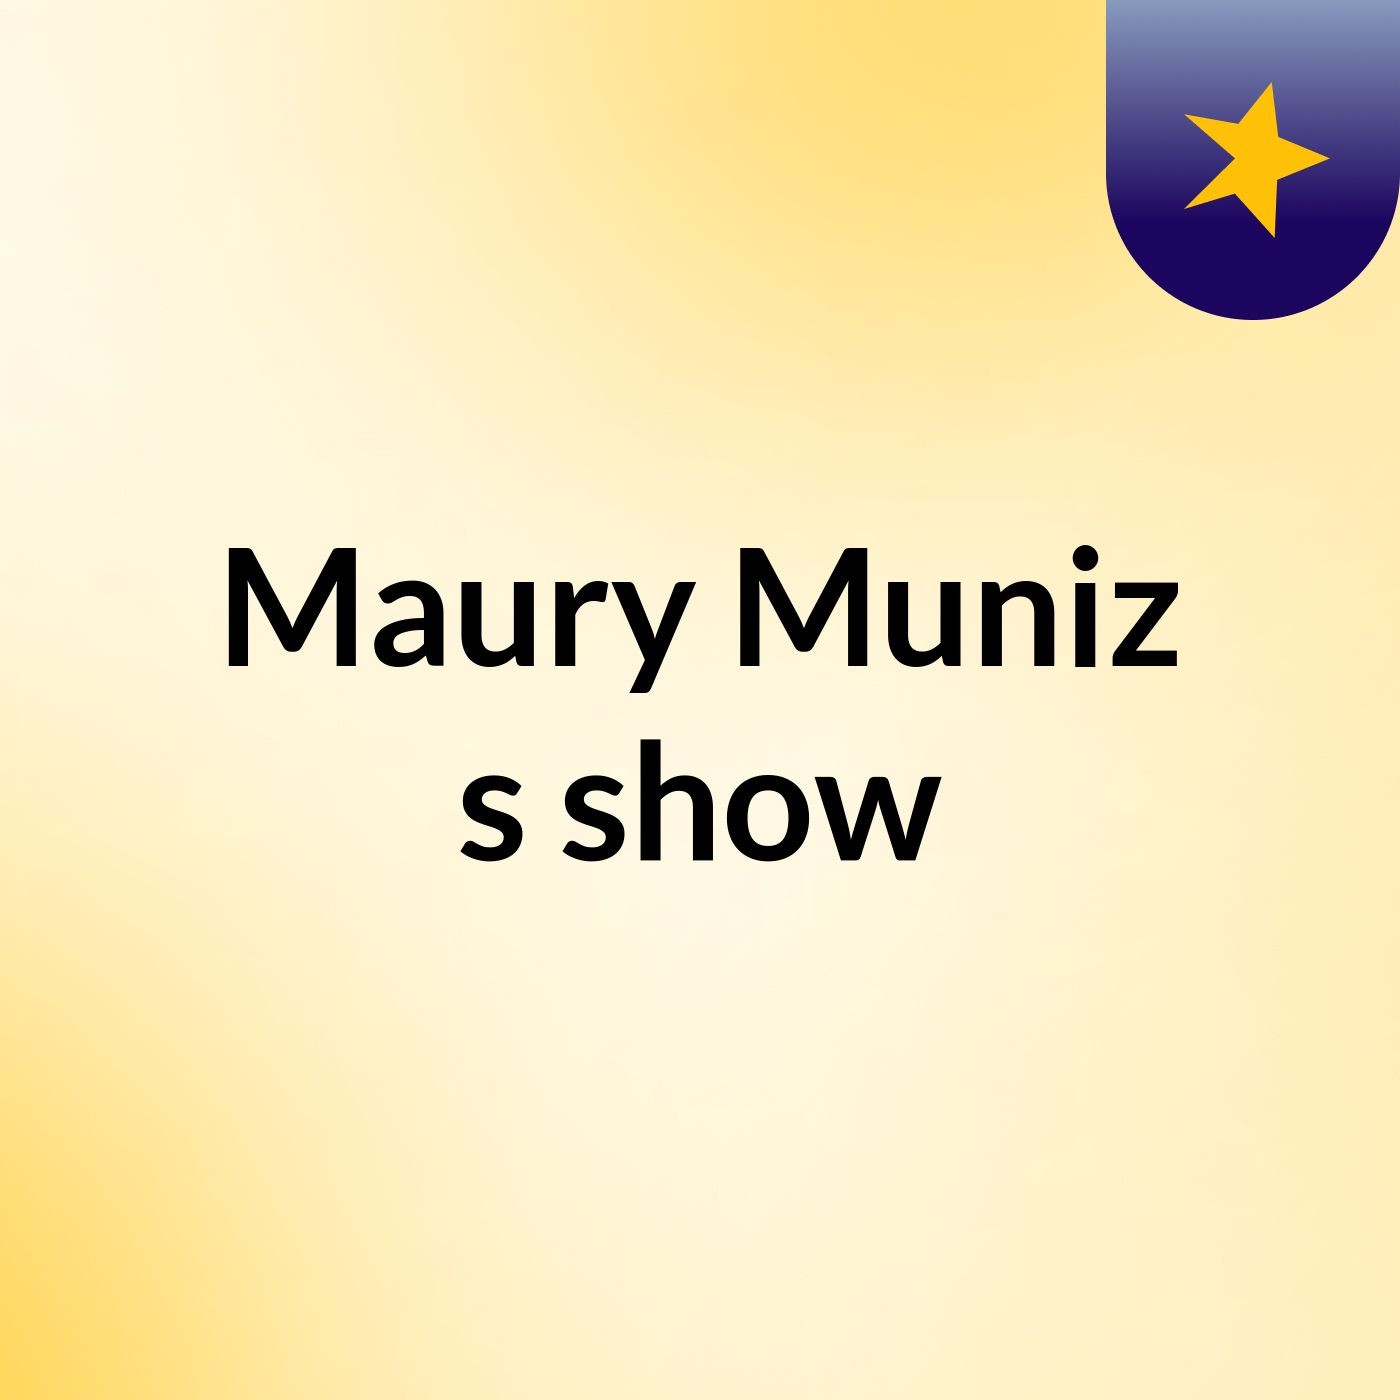 Maury Muniz's show